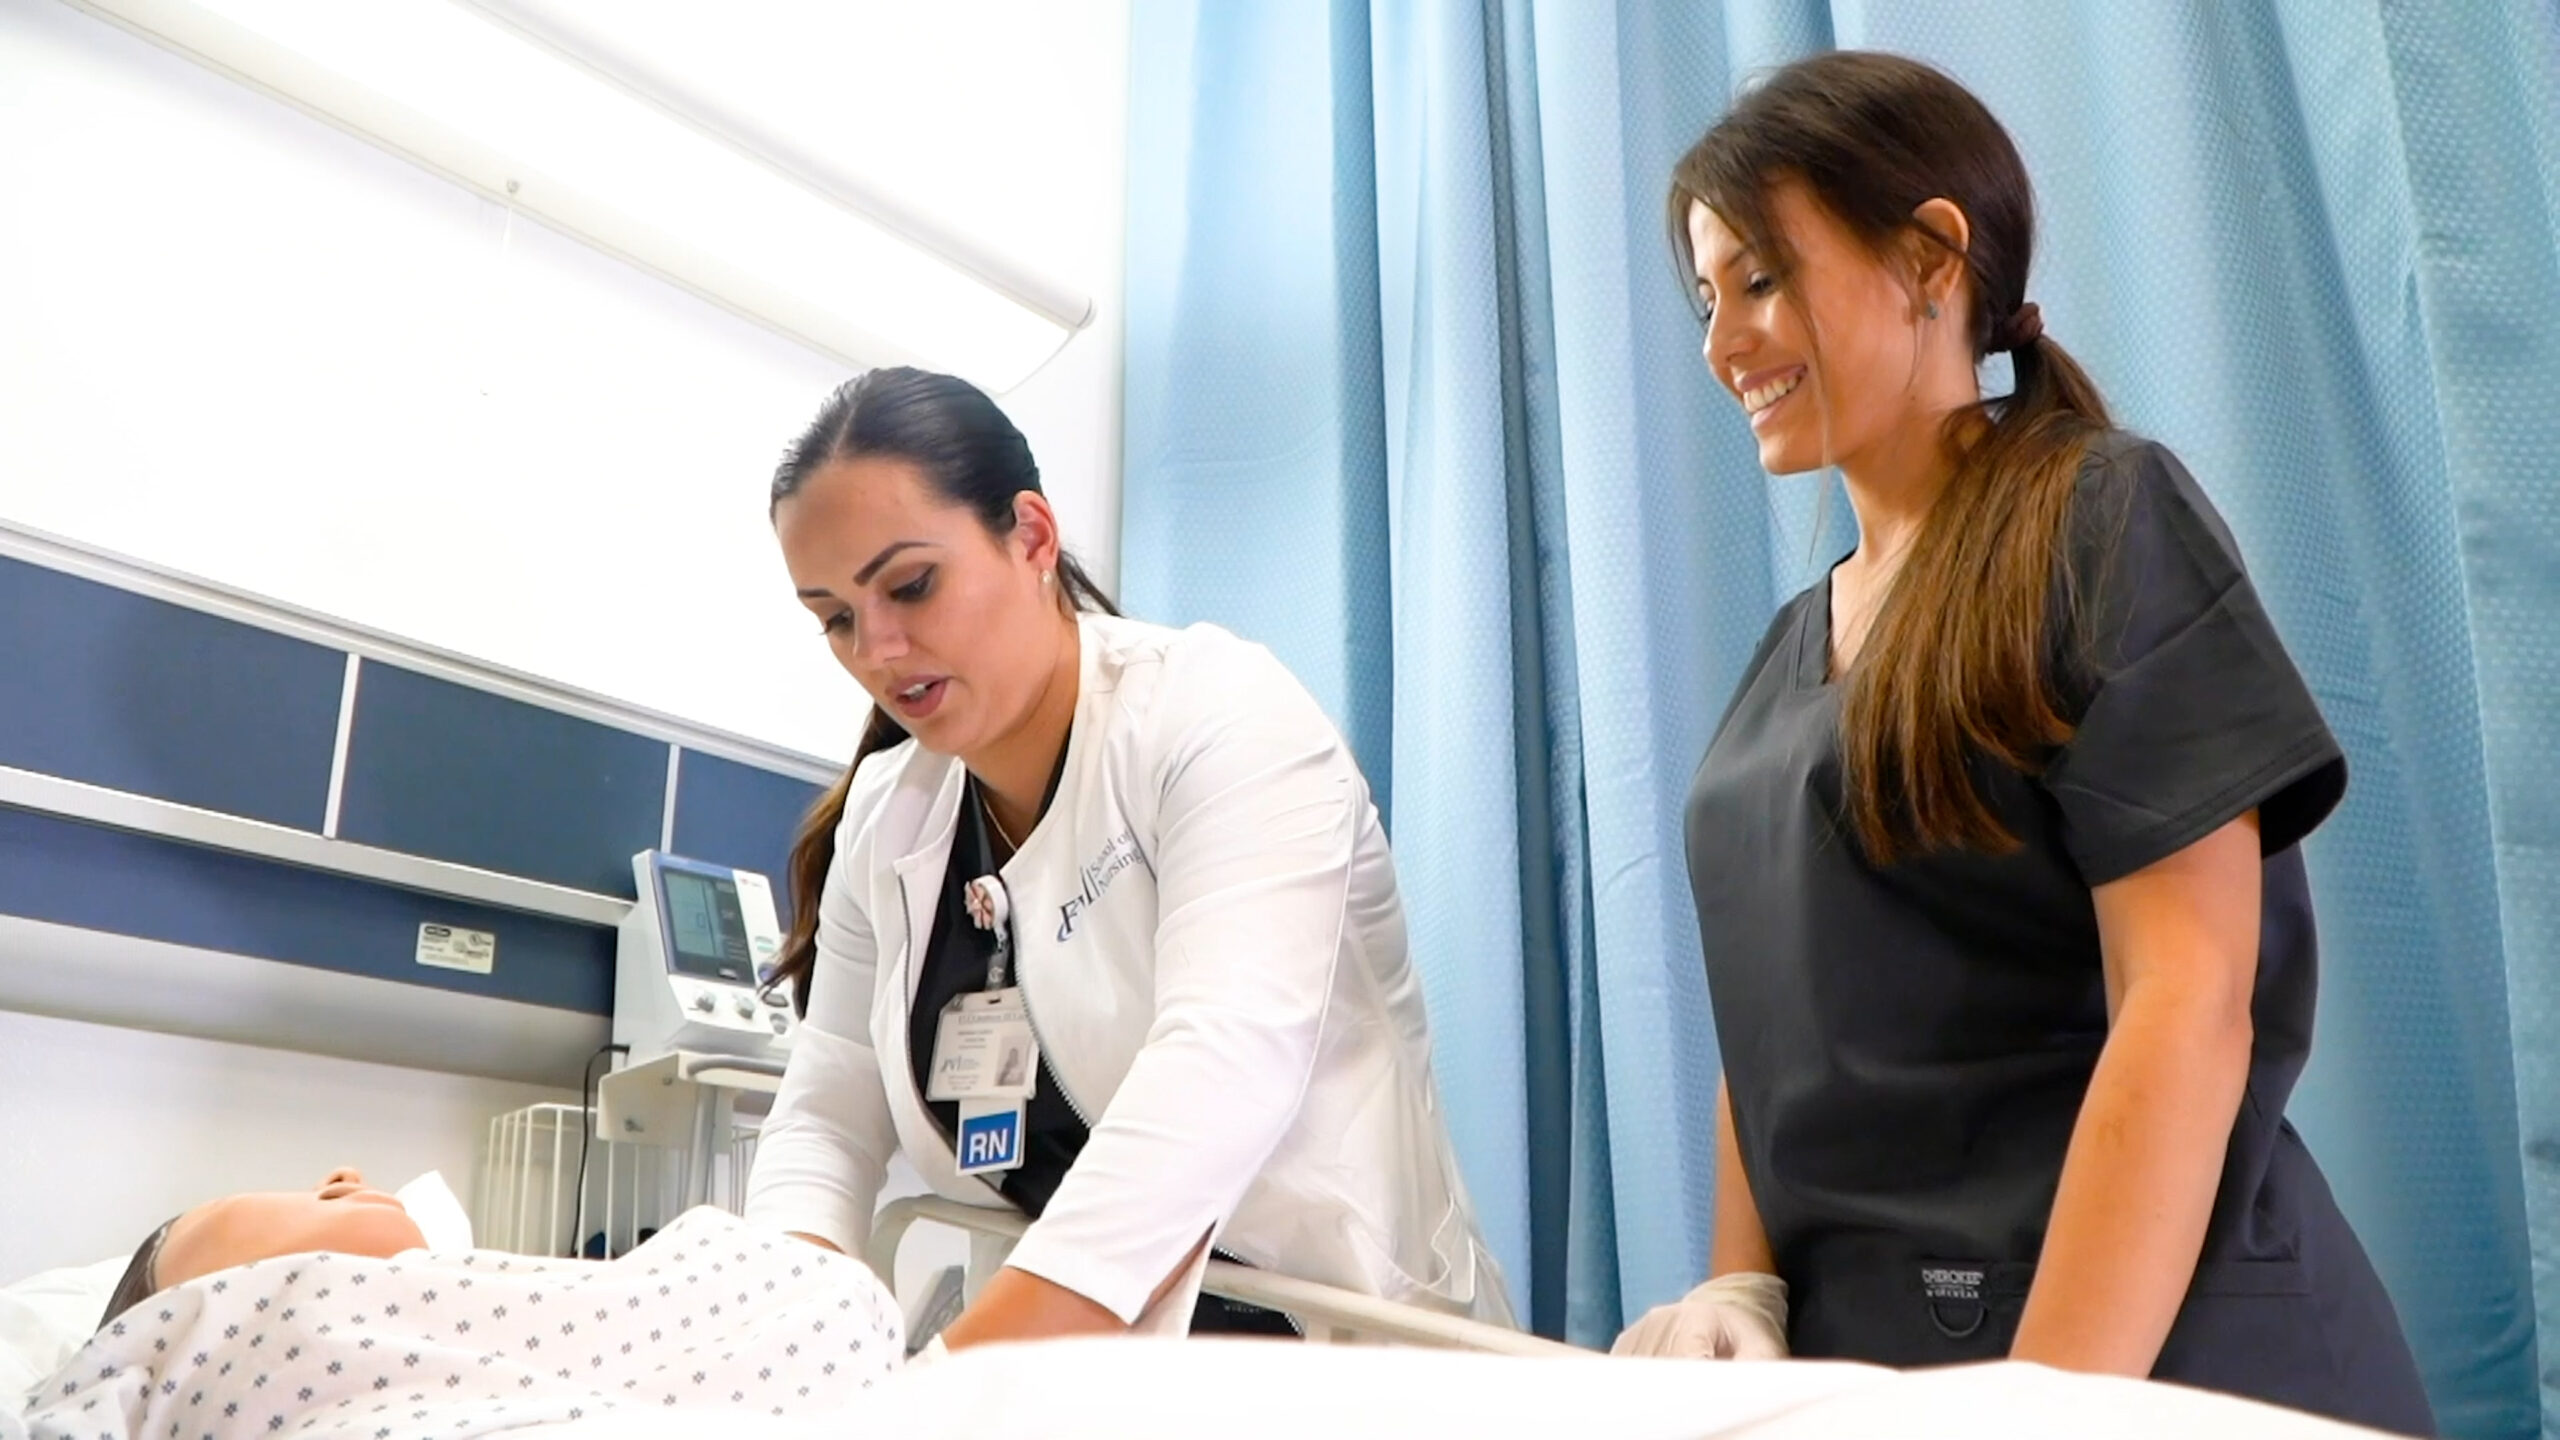 An FVI instructor demonstrates a medical procedure while a nursing student observes